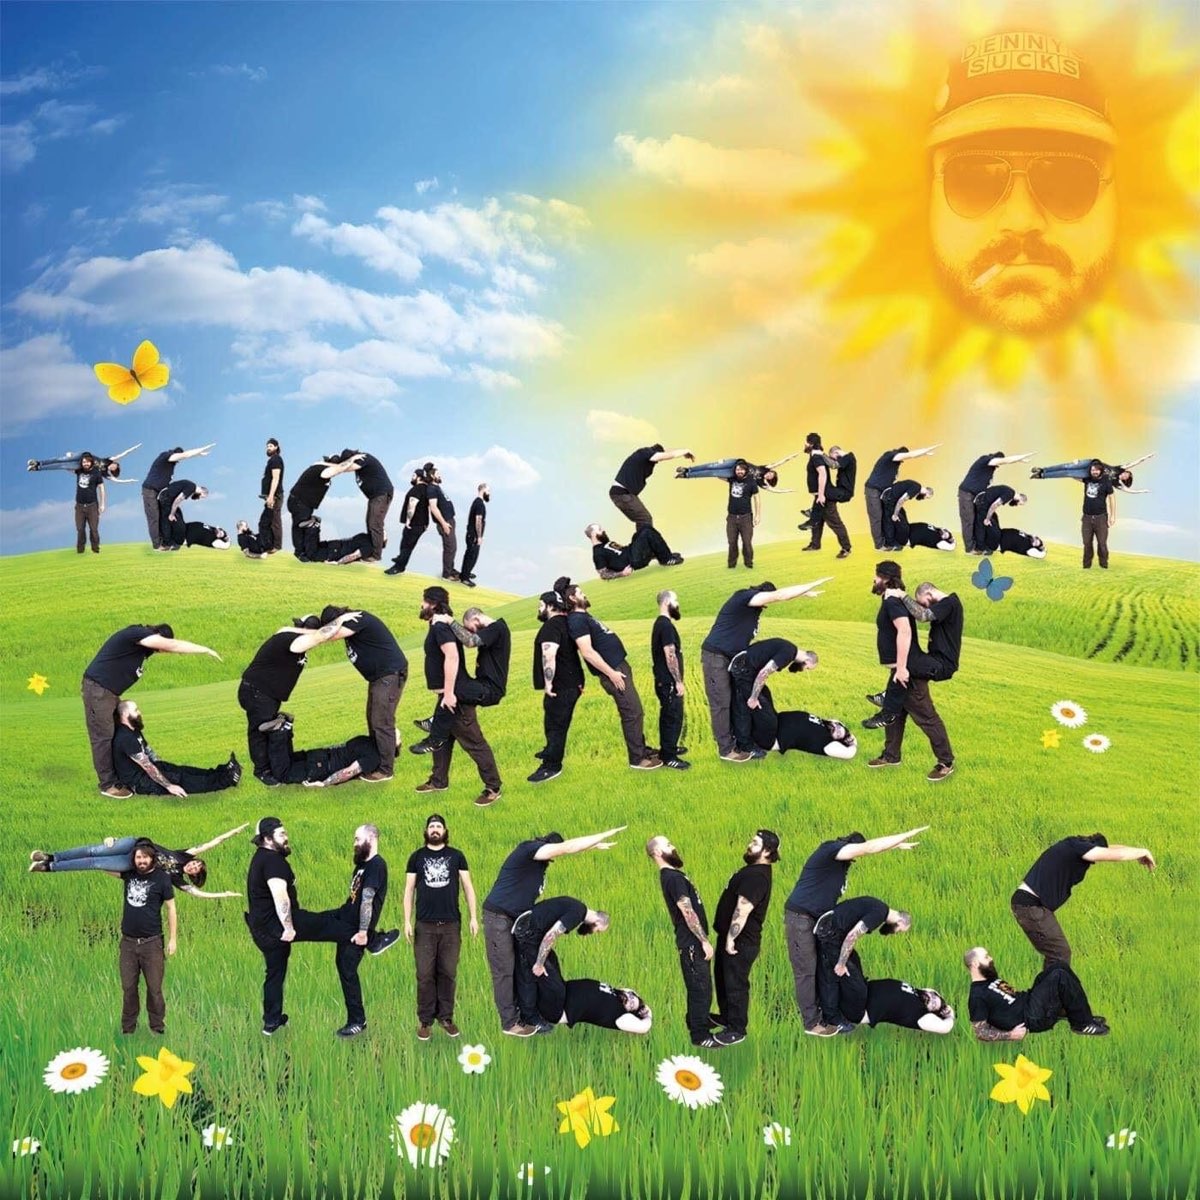 Street corner thieves